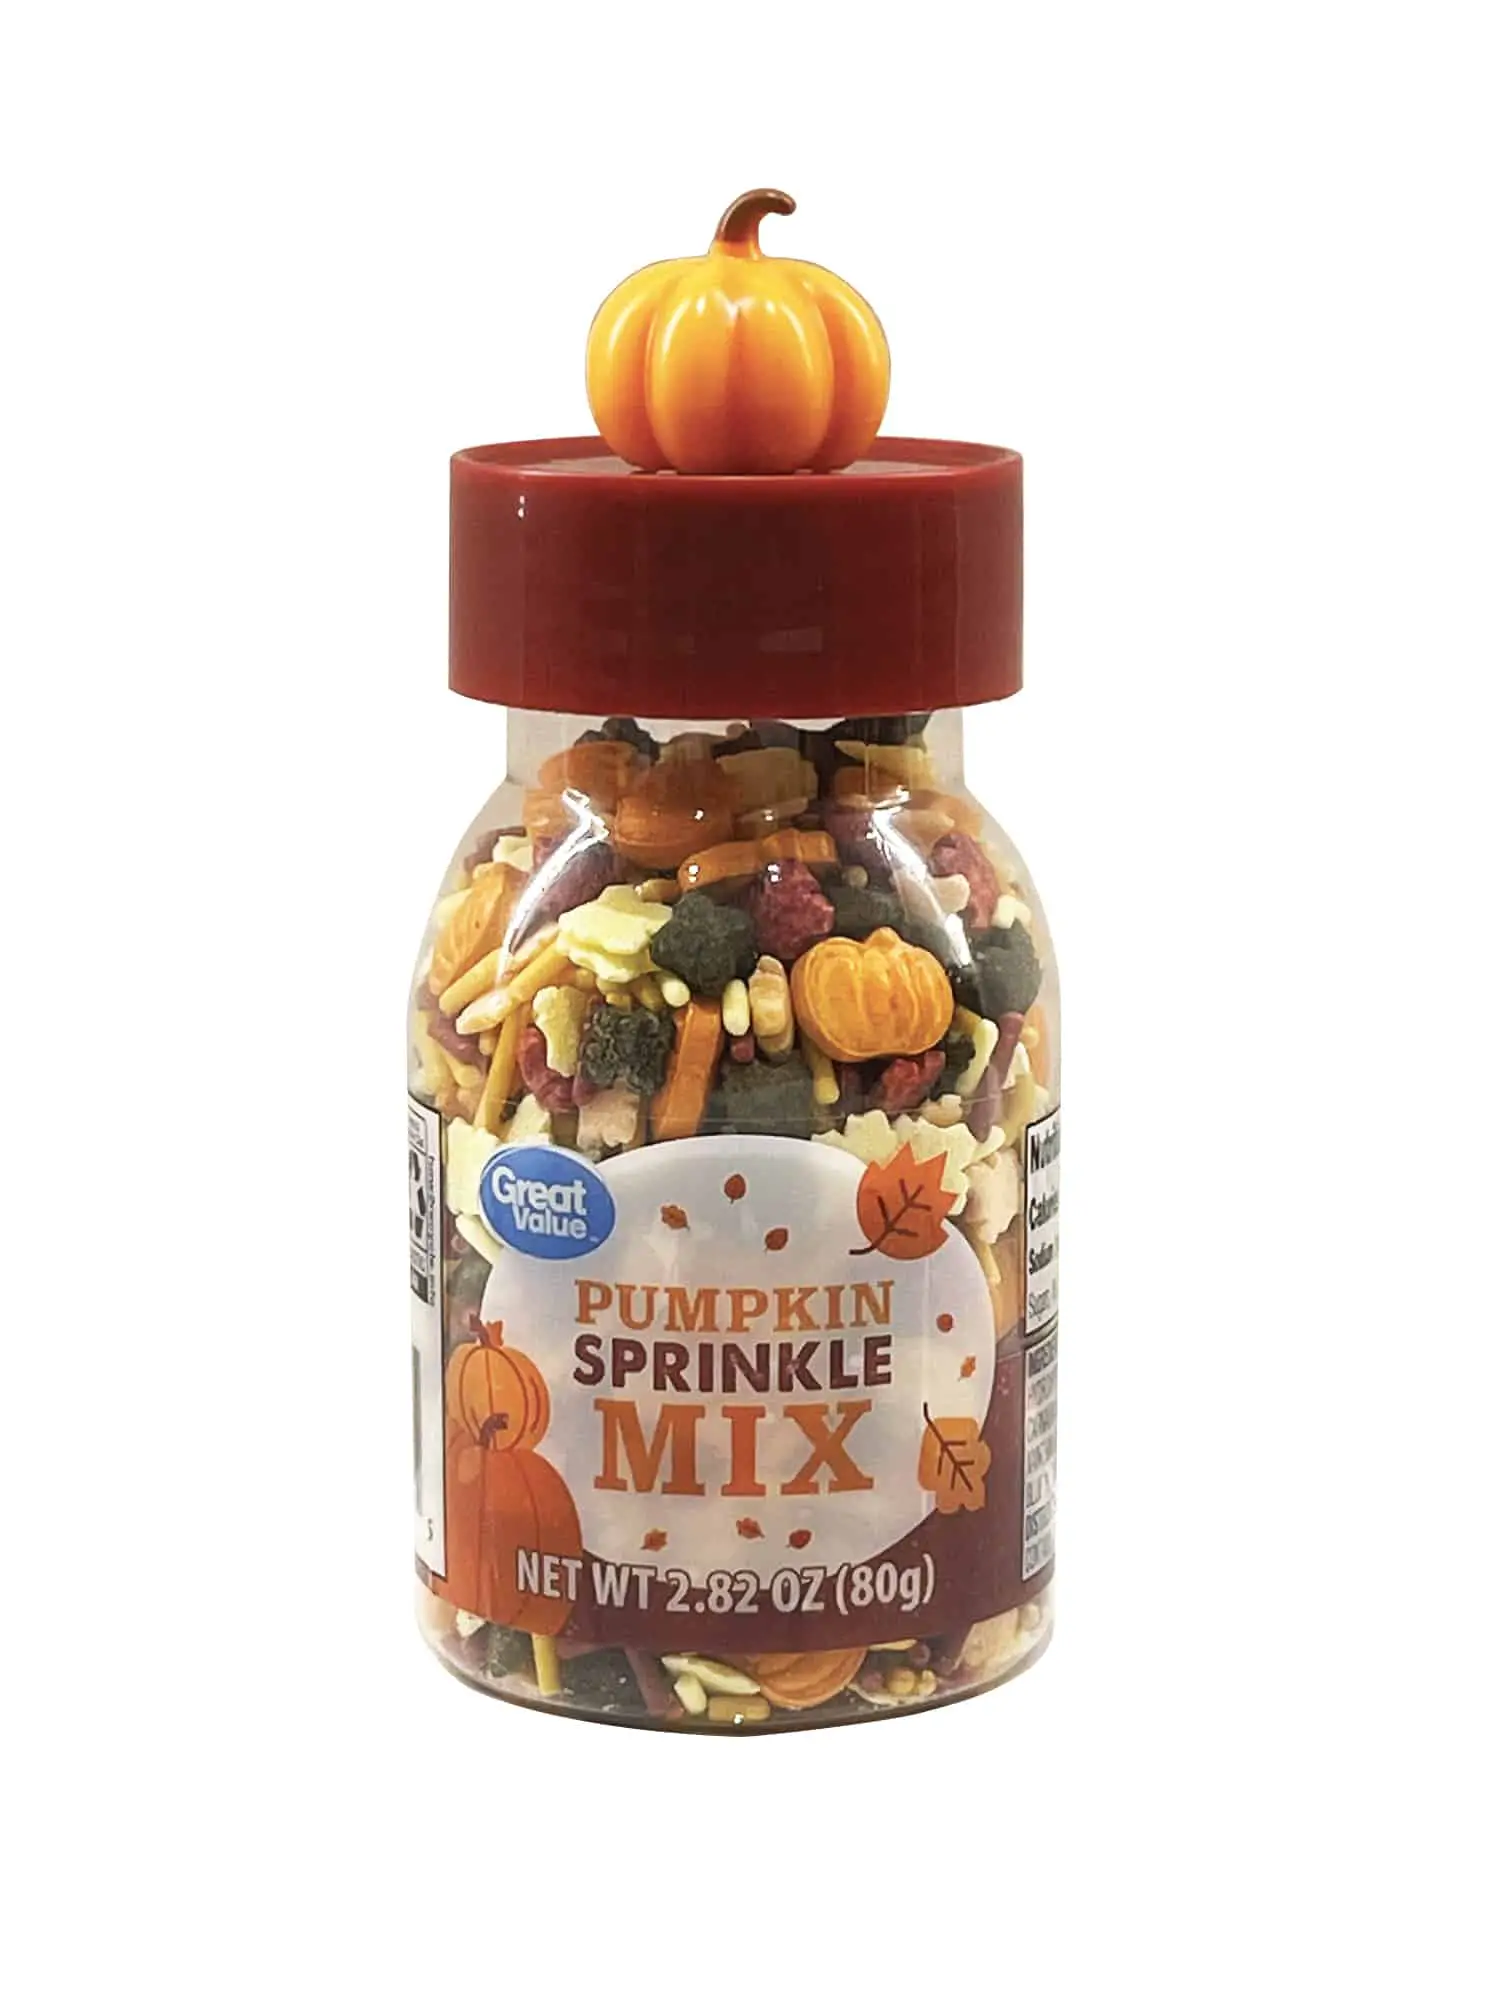 Great Value Pumpkin Sprinkle Mix, 2.82 oz - Walmart.com